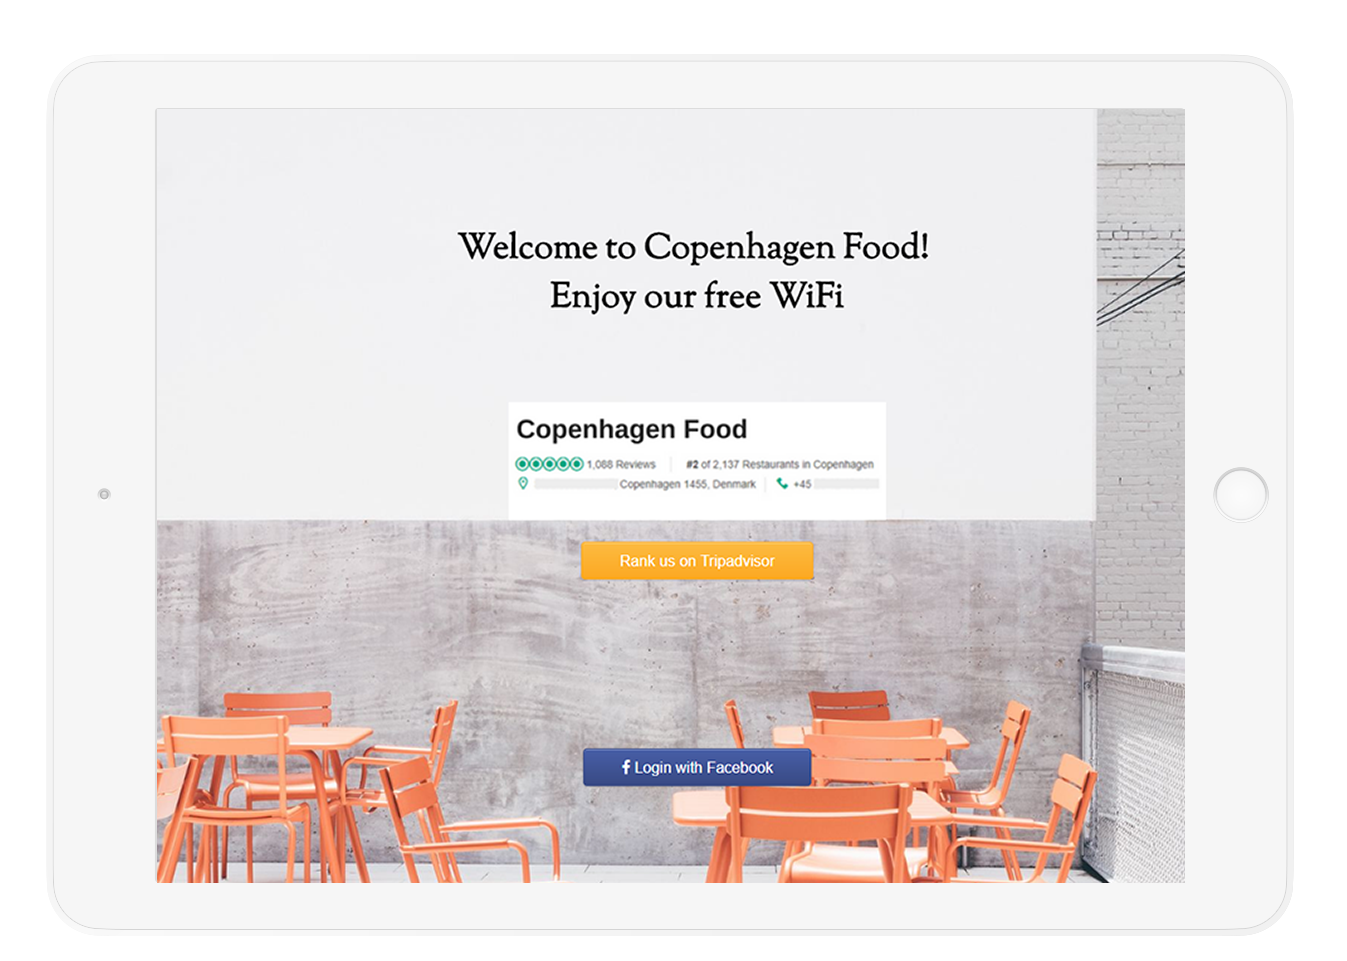 Copenhagen FoodTripadvisor Reviews Splash Page Final Example